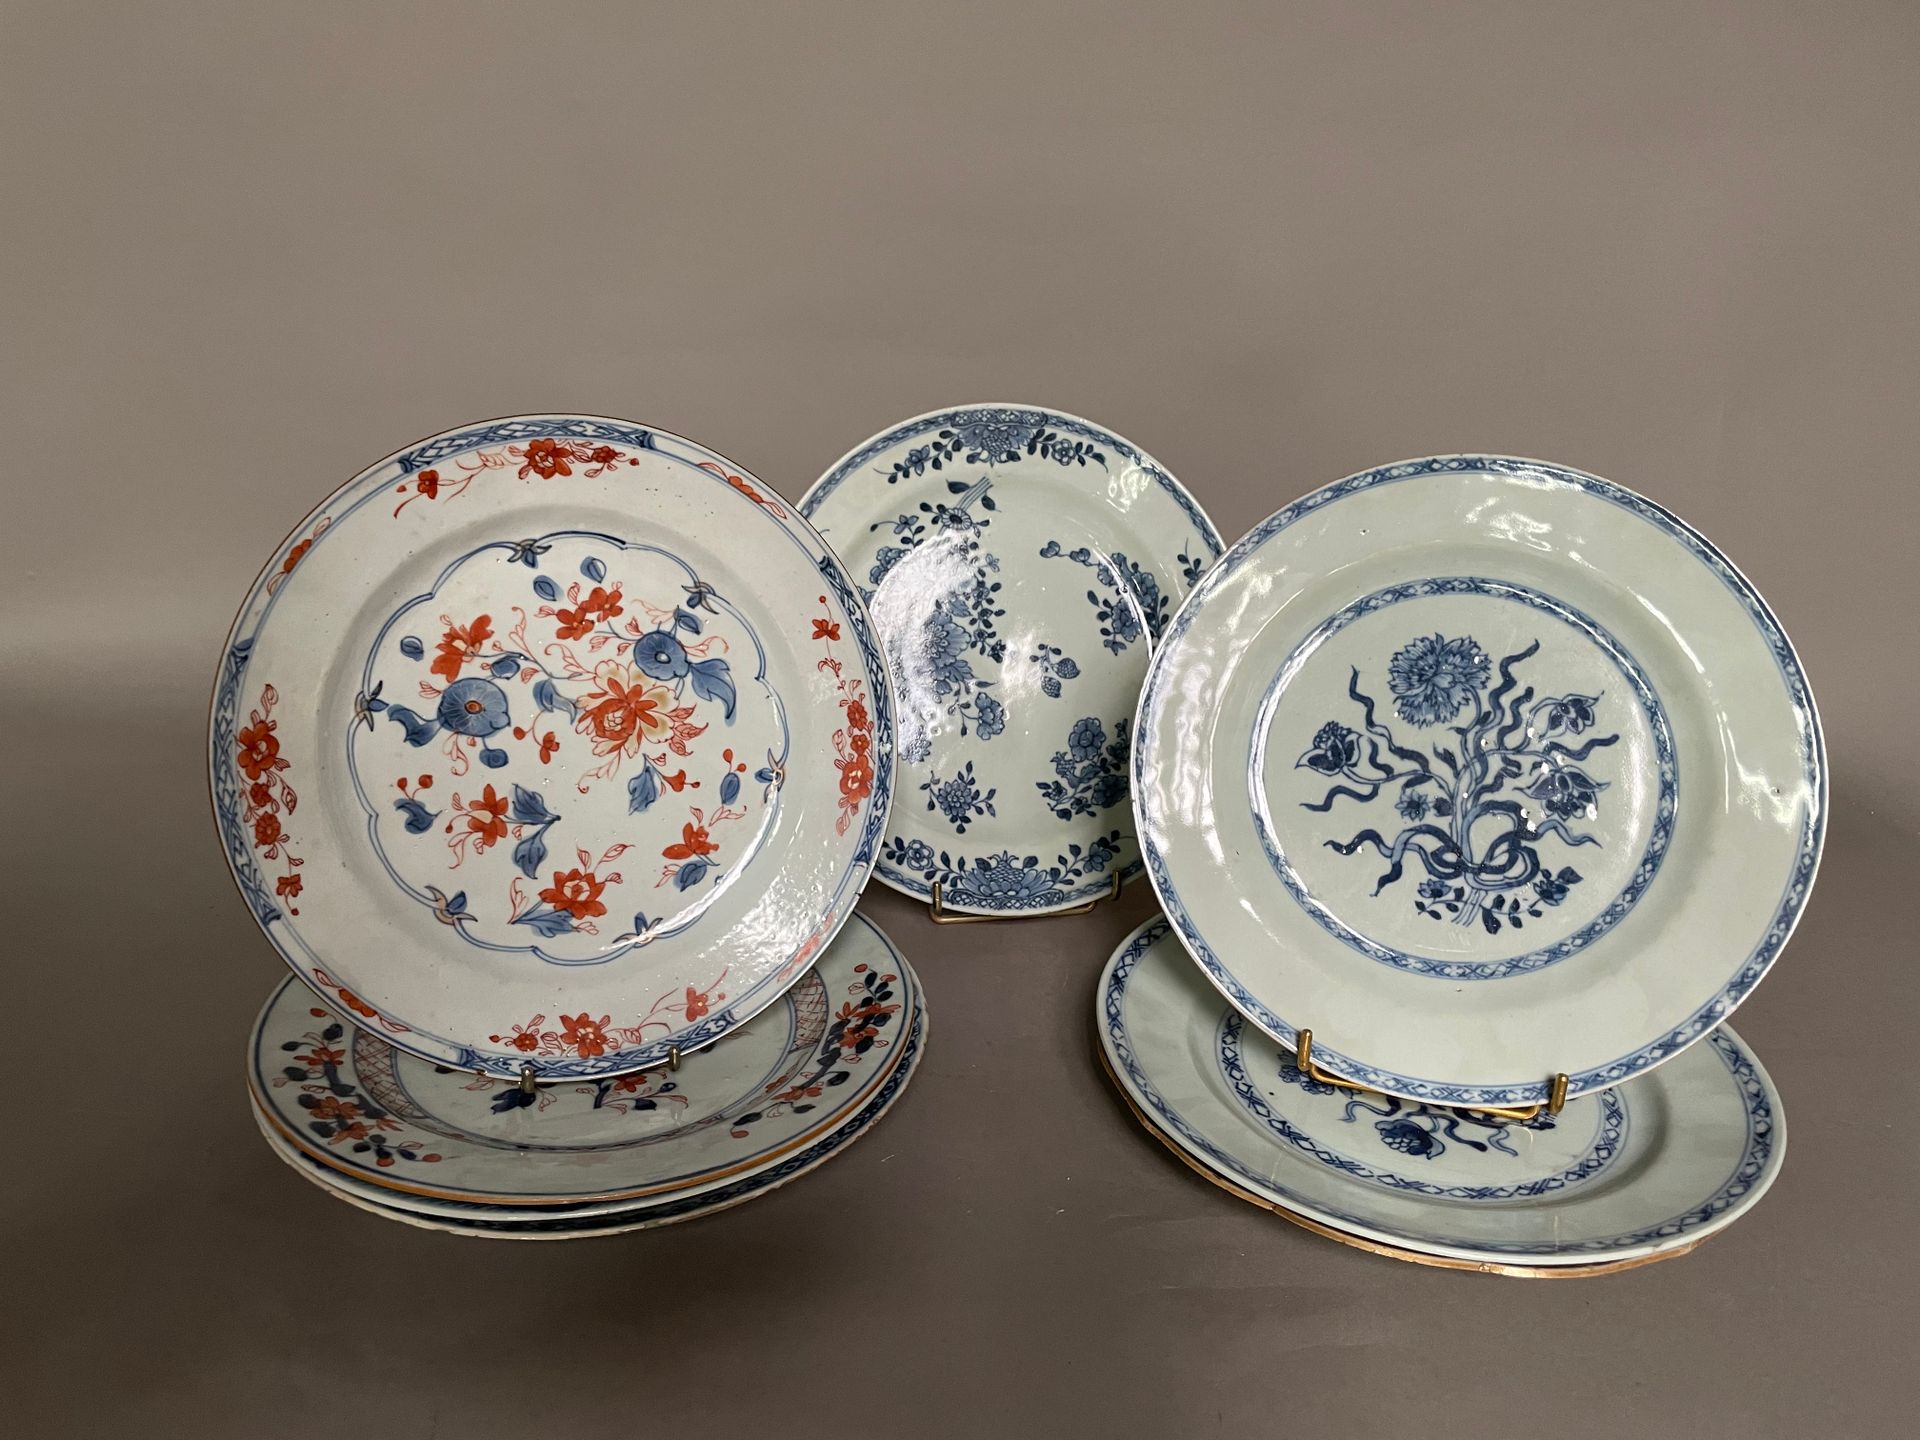 Null 一套8个瓷盘。

- 两个盘子用蓝色釉下彩装饰的花朵。中国，以印度公司的风格。D. 23和23.5厘米

- 瓷盘上有蓝色釉下彩的花卉图案装饰。中国，&hellip;